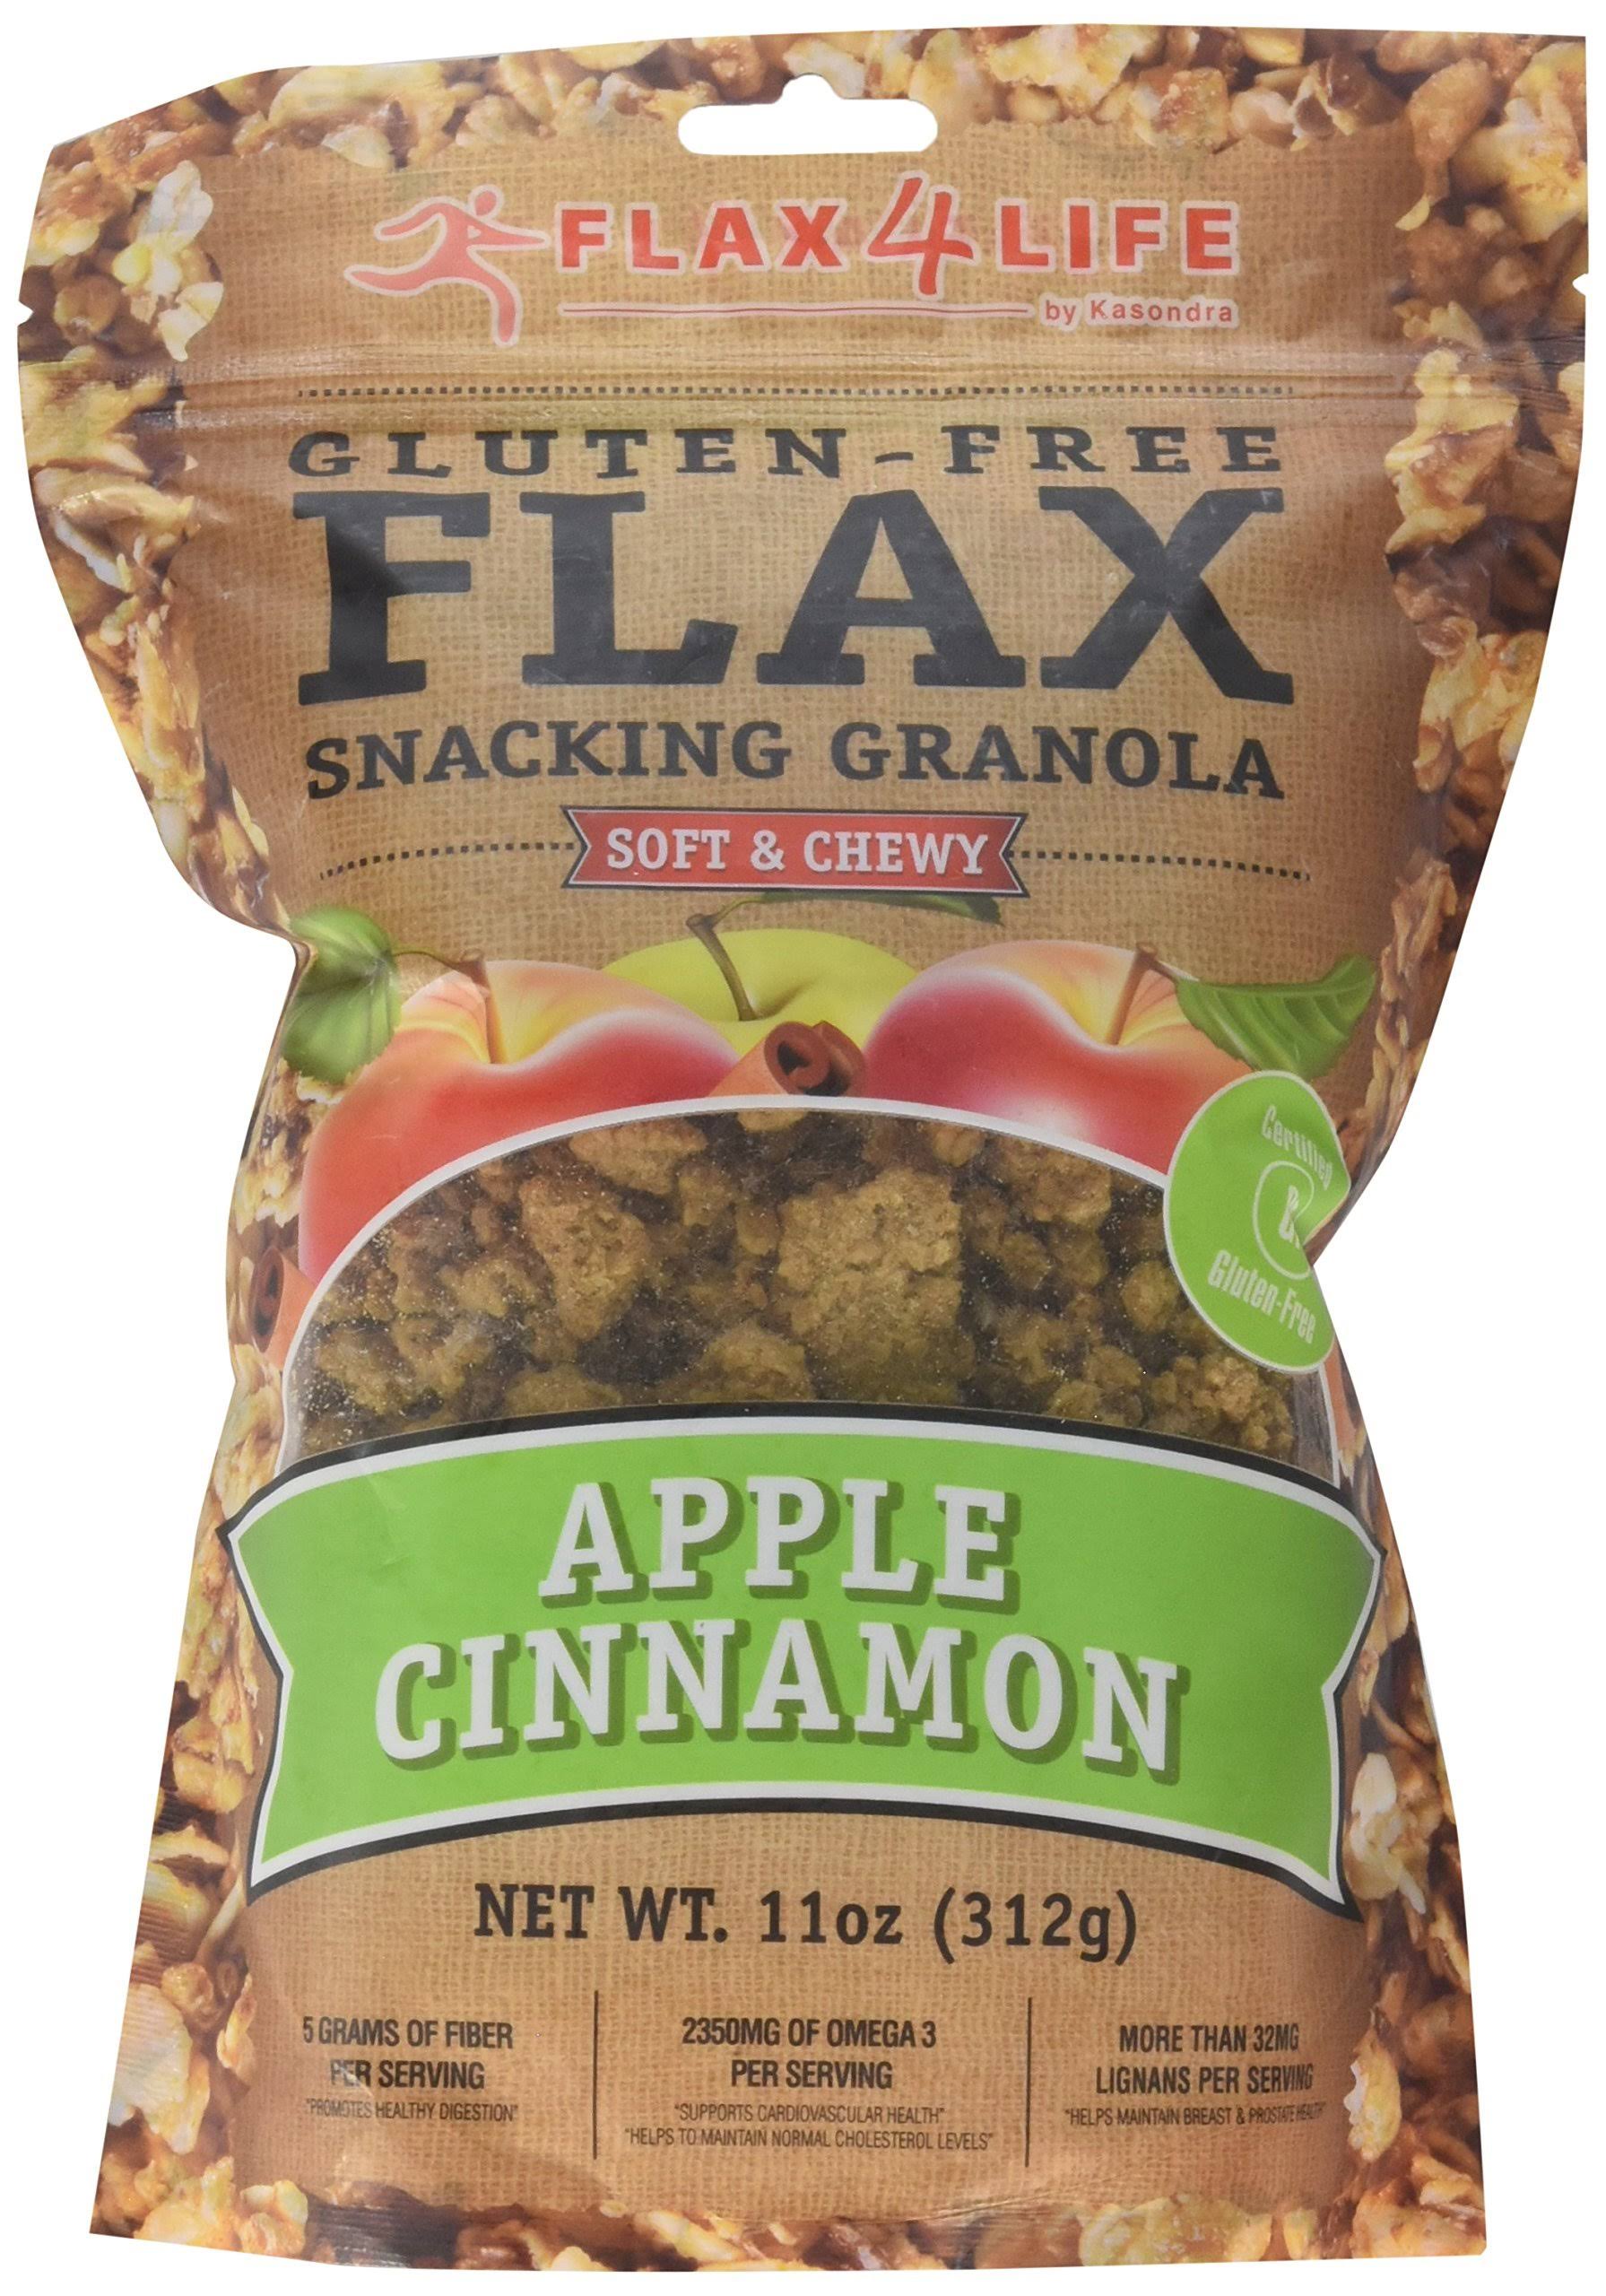 Flax 4 Life Gluten Free Flax Snacking Granola - Apple Cinnamon, 312g